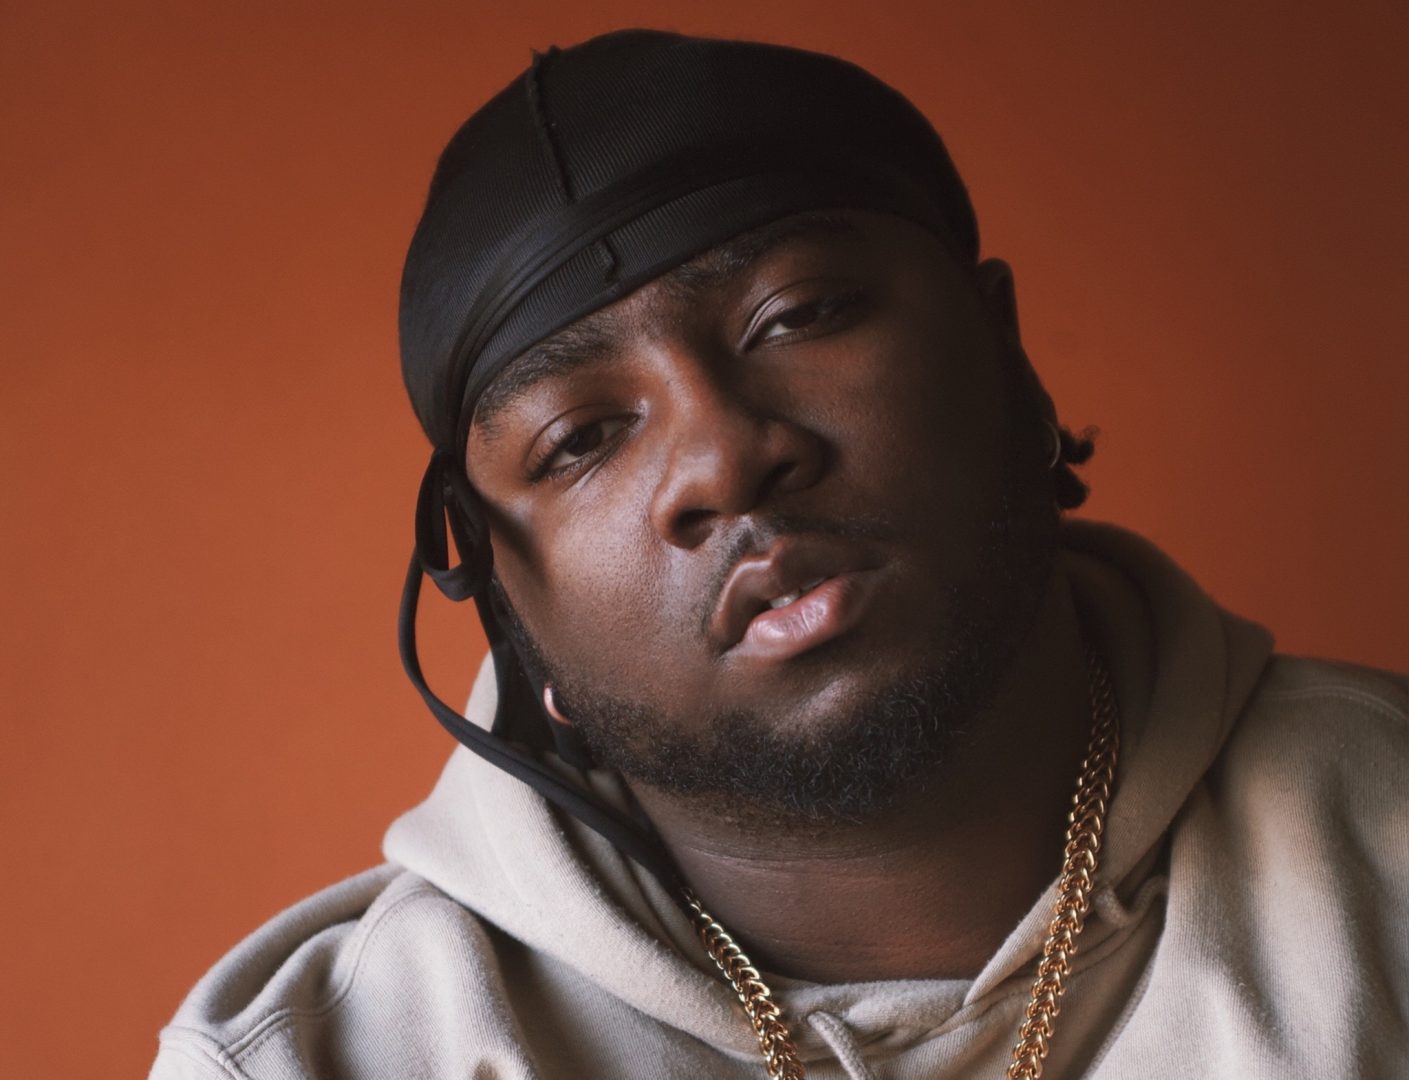 Rapper Saint Even is bringing a fresh new perspective to Atlanta hip-hop